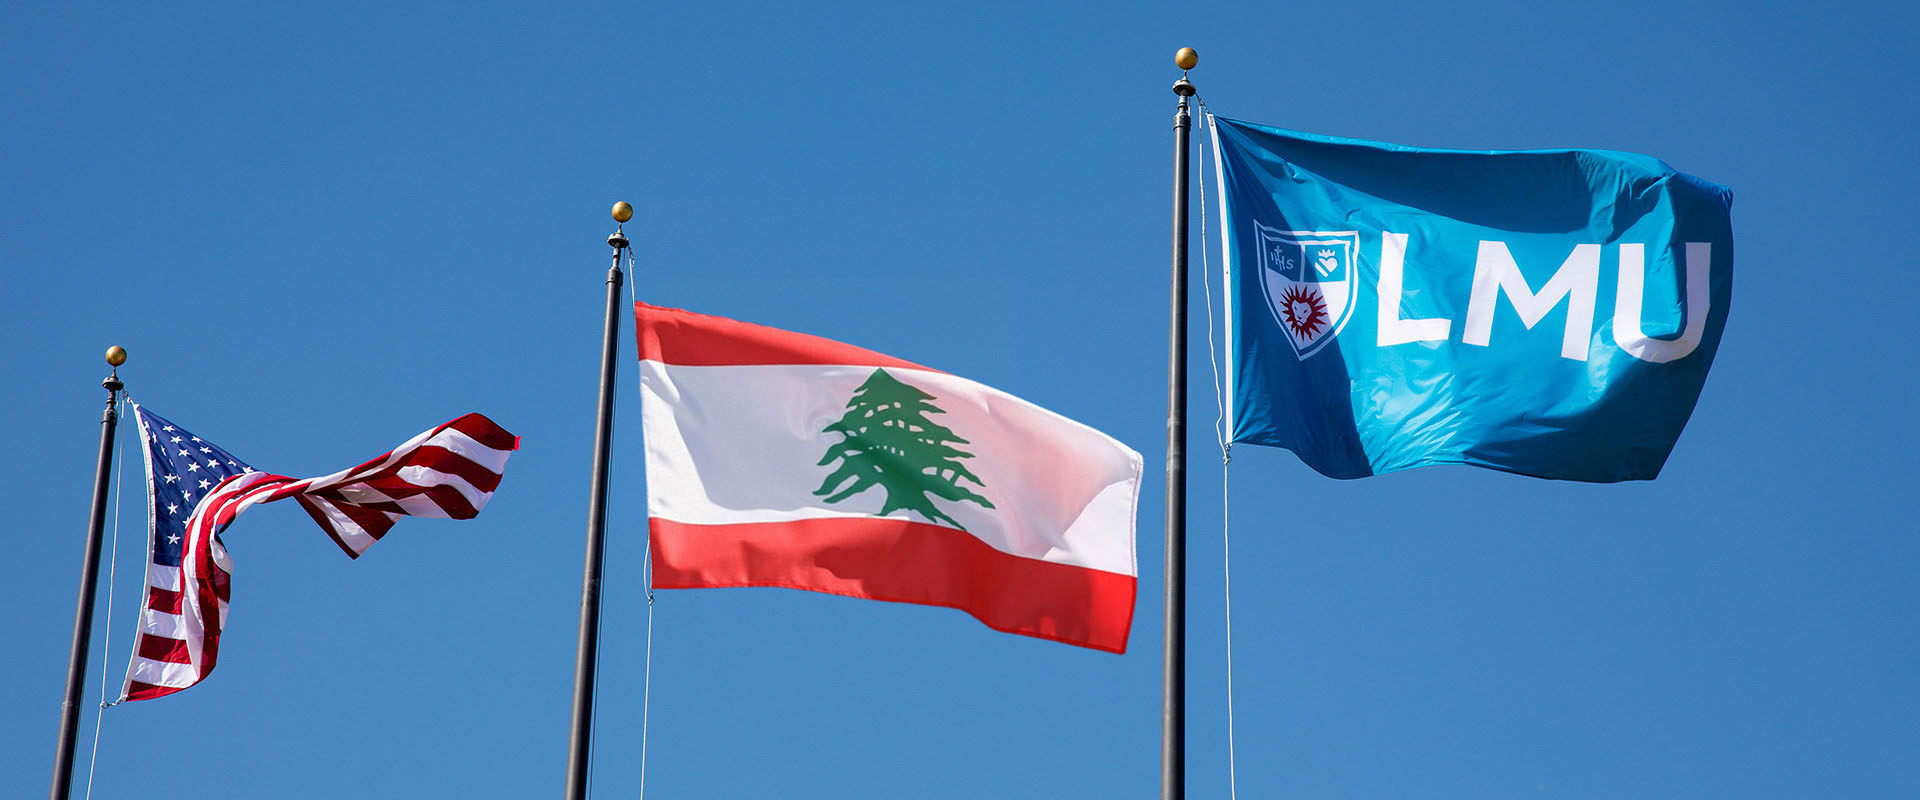 Flags - A Lamentation for Lebanon